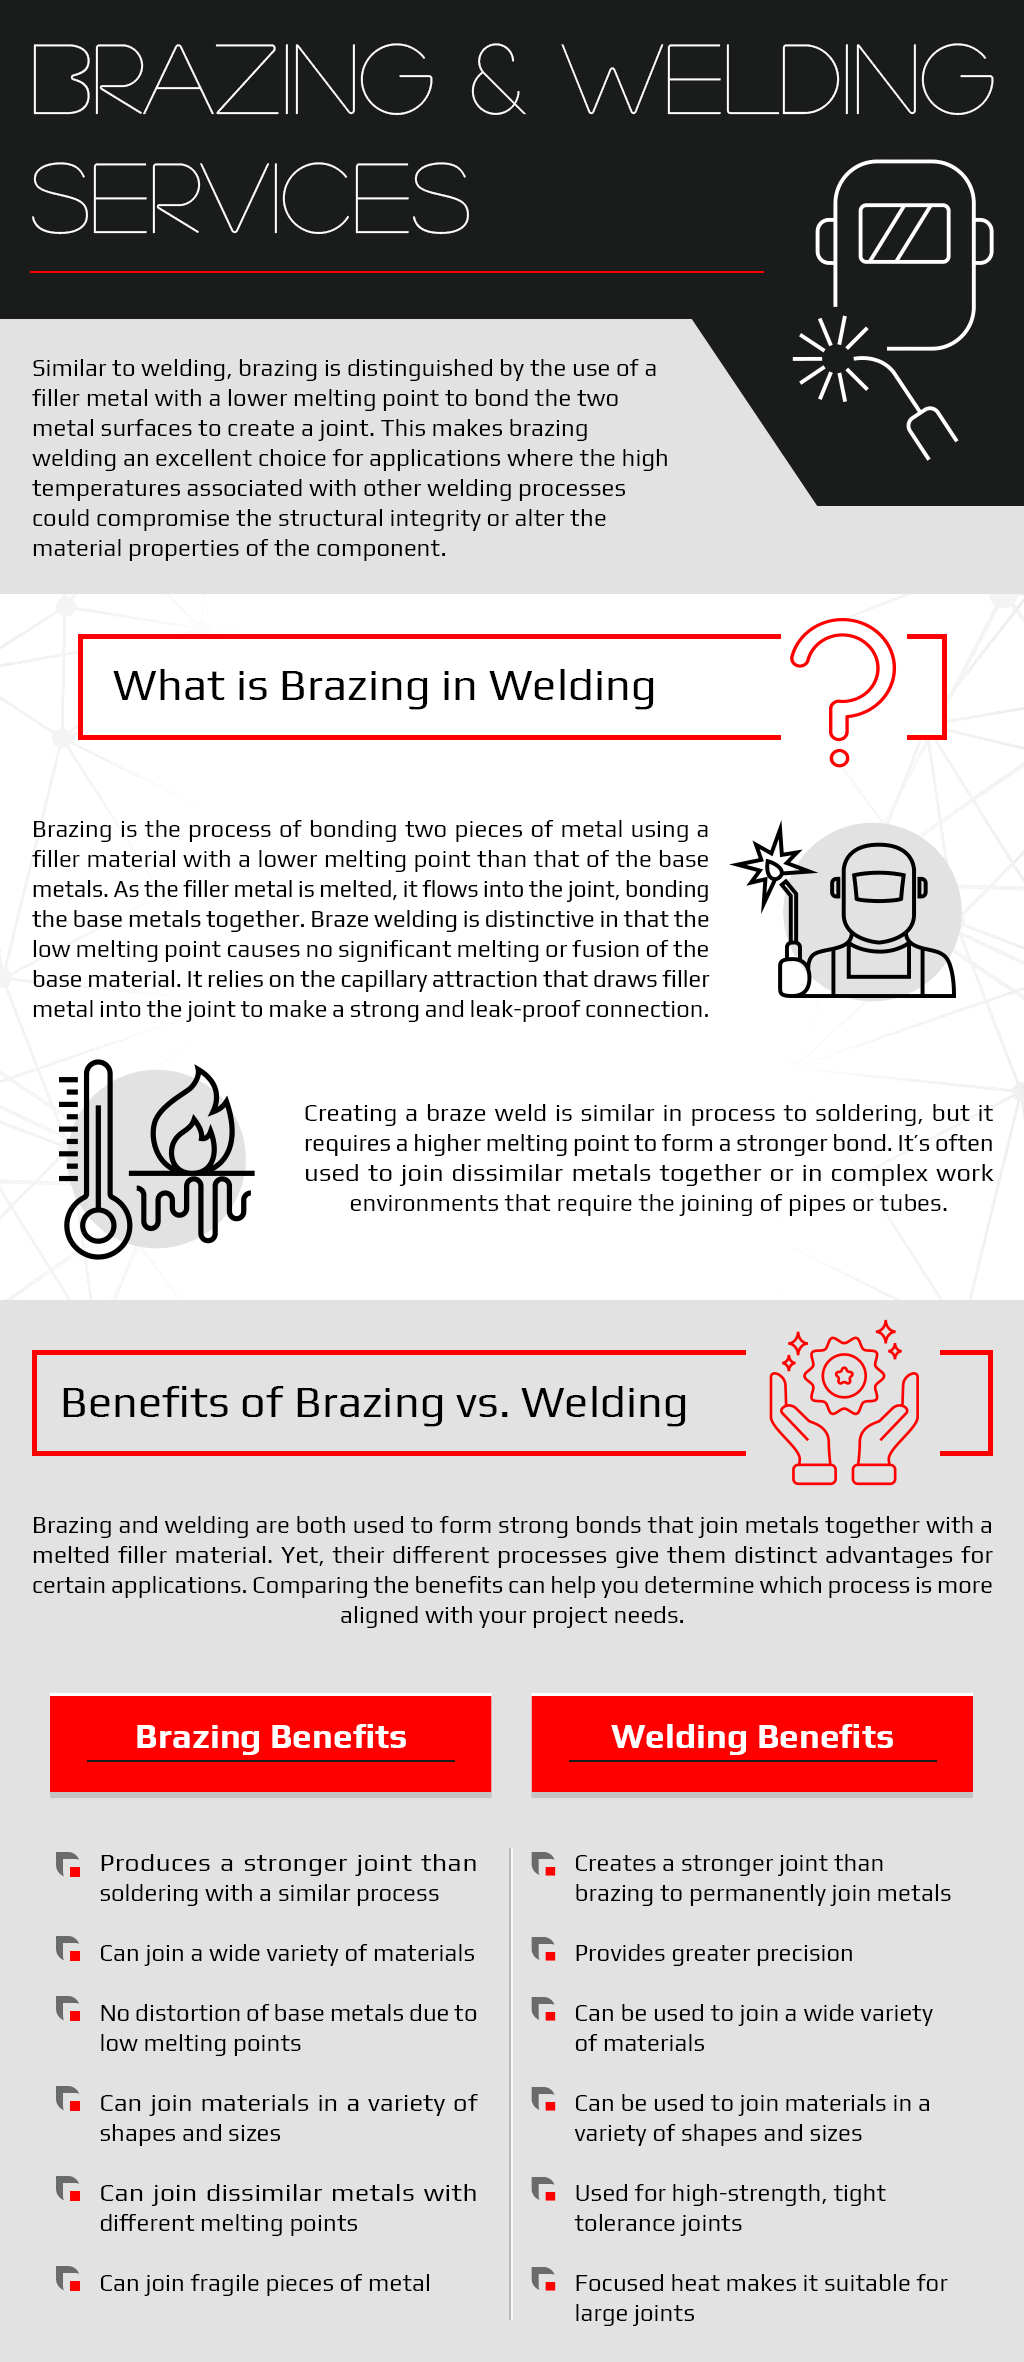 Brazing & Welding Services